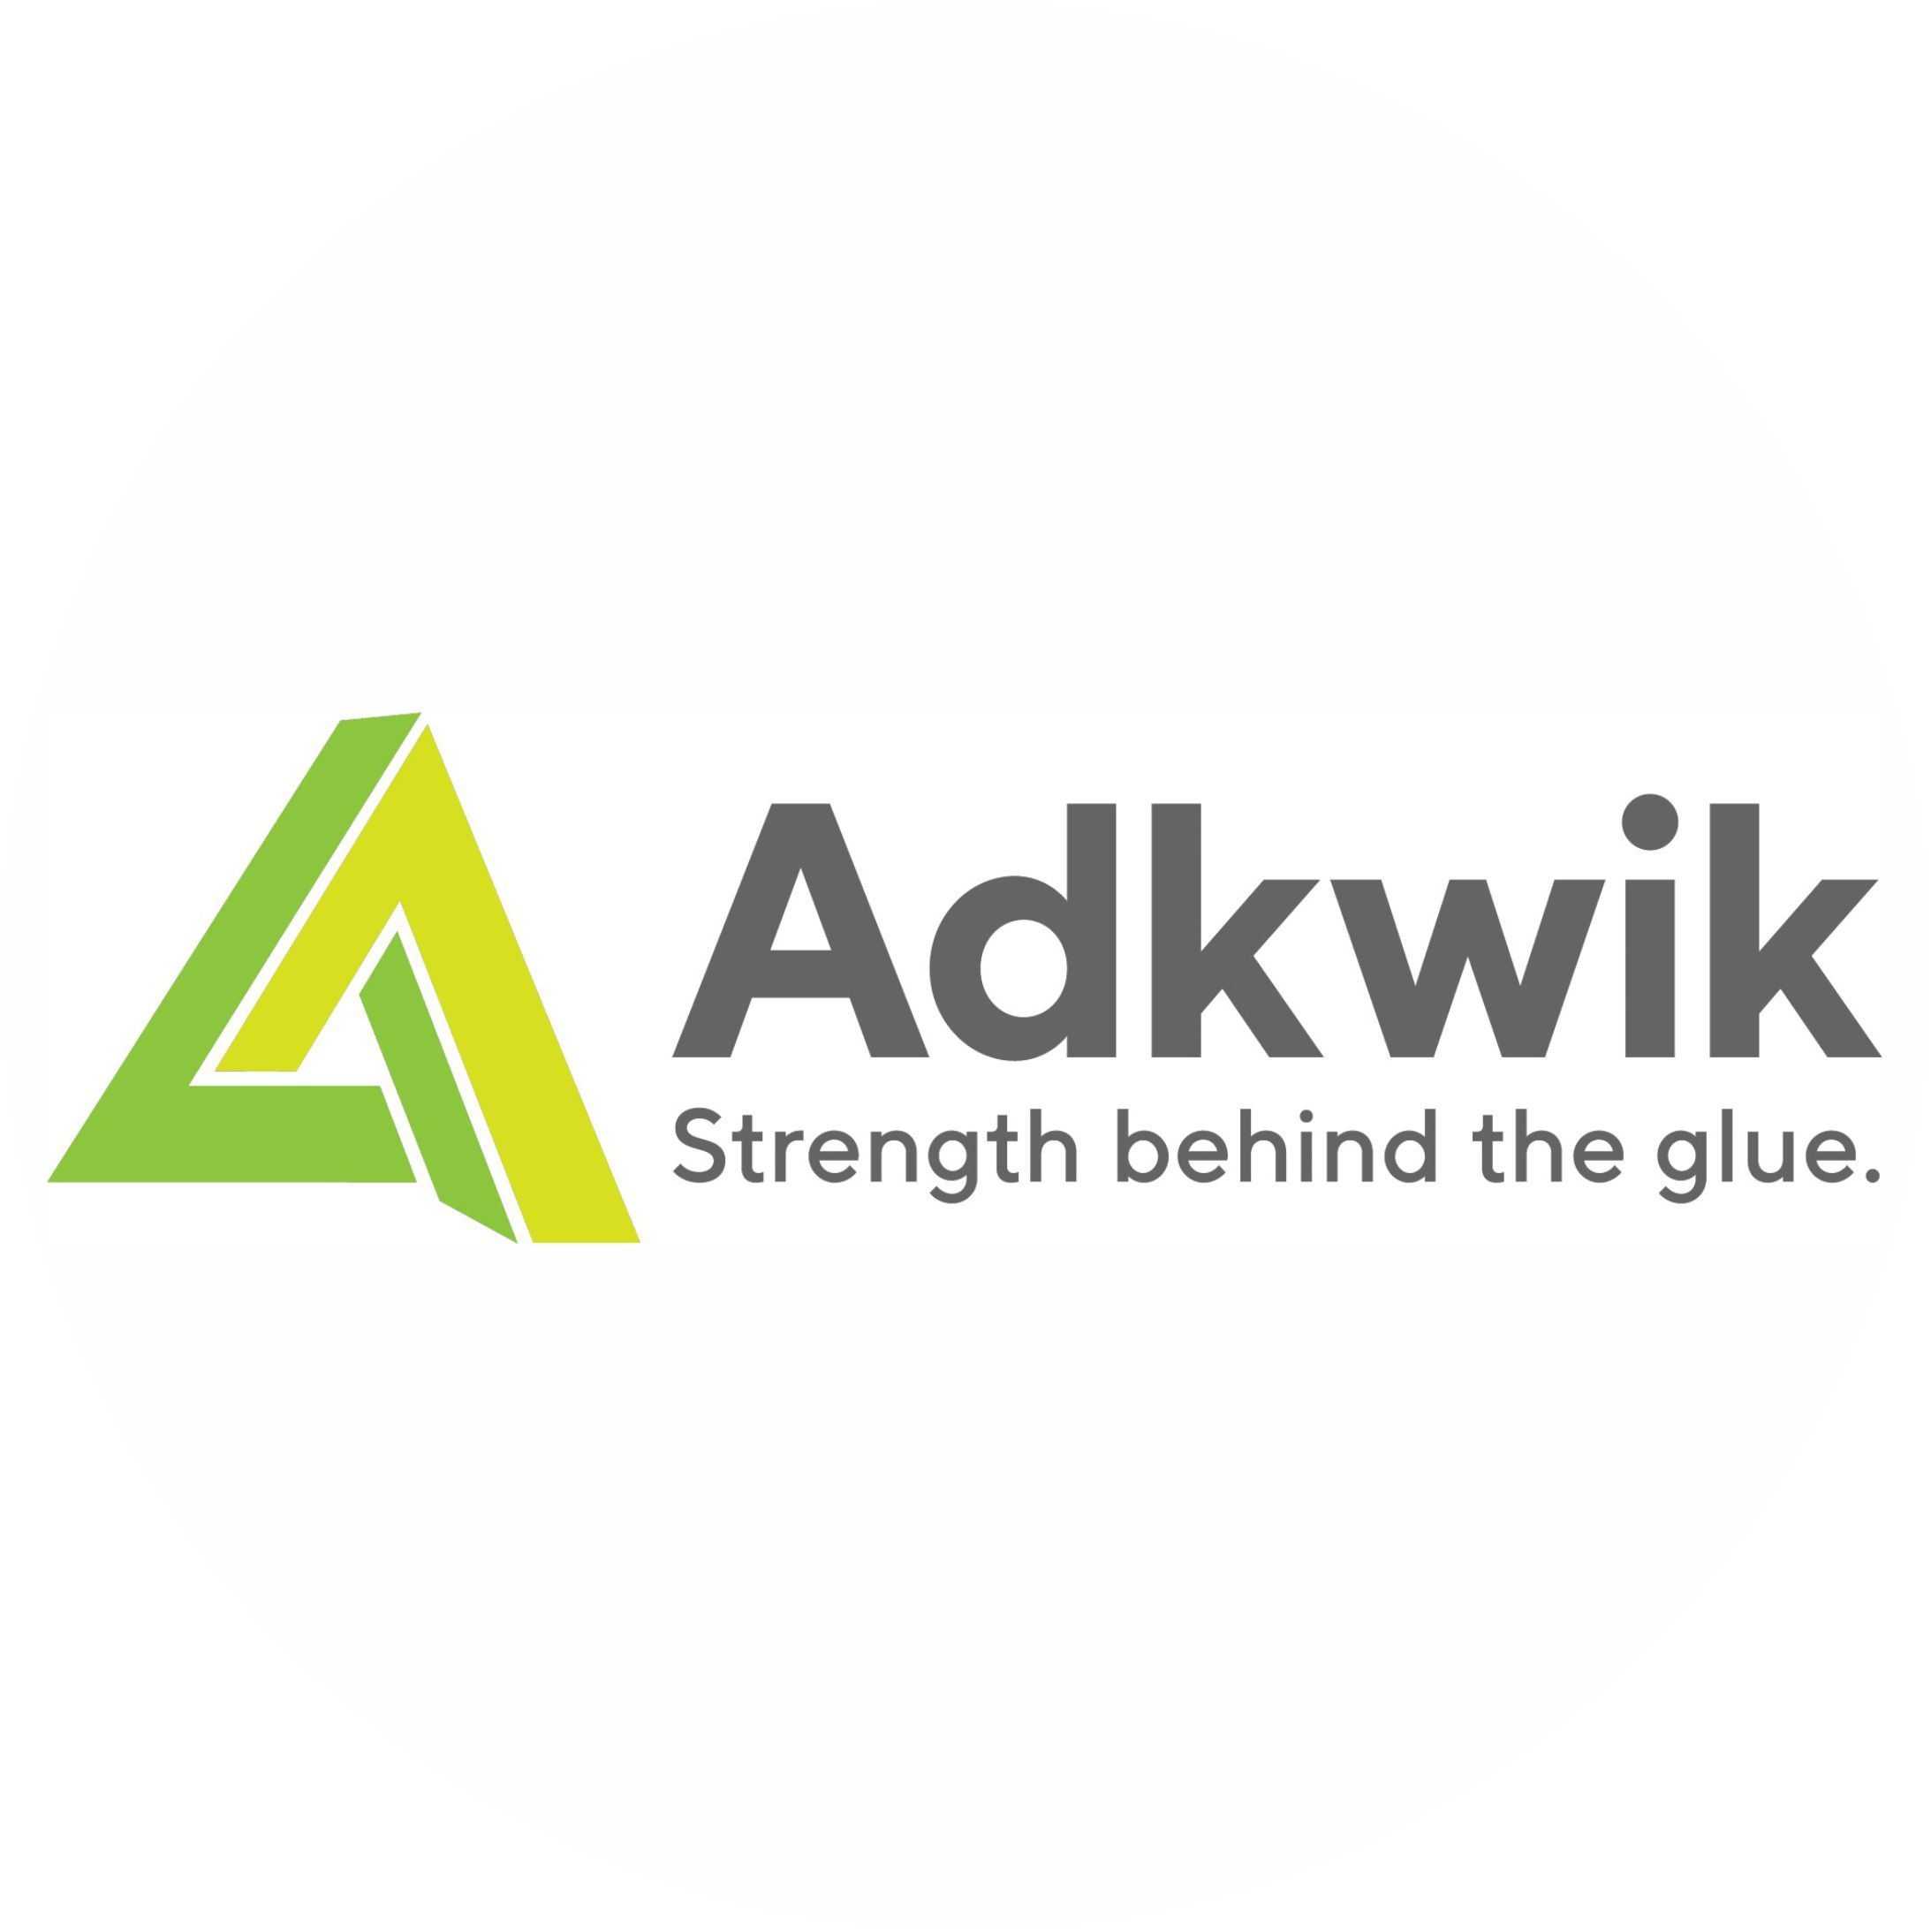 Adkwick